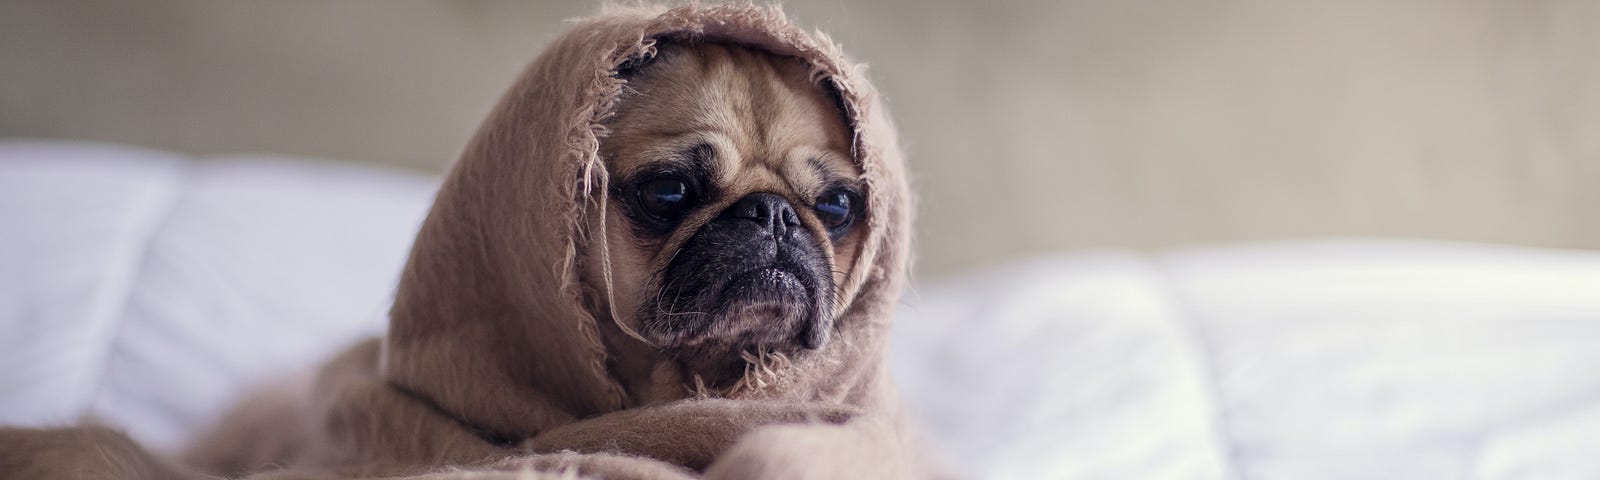 Dog under a blanket looking very sad